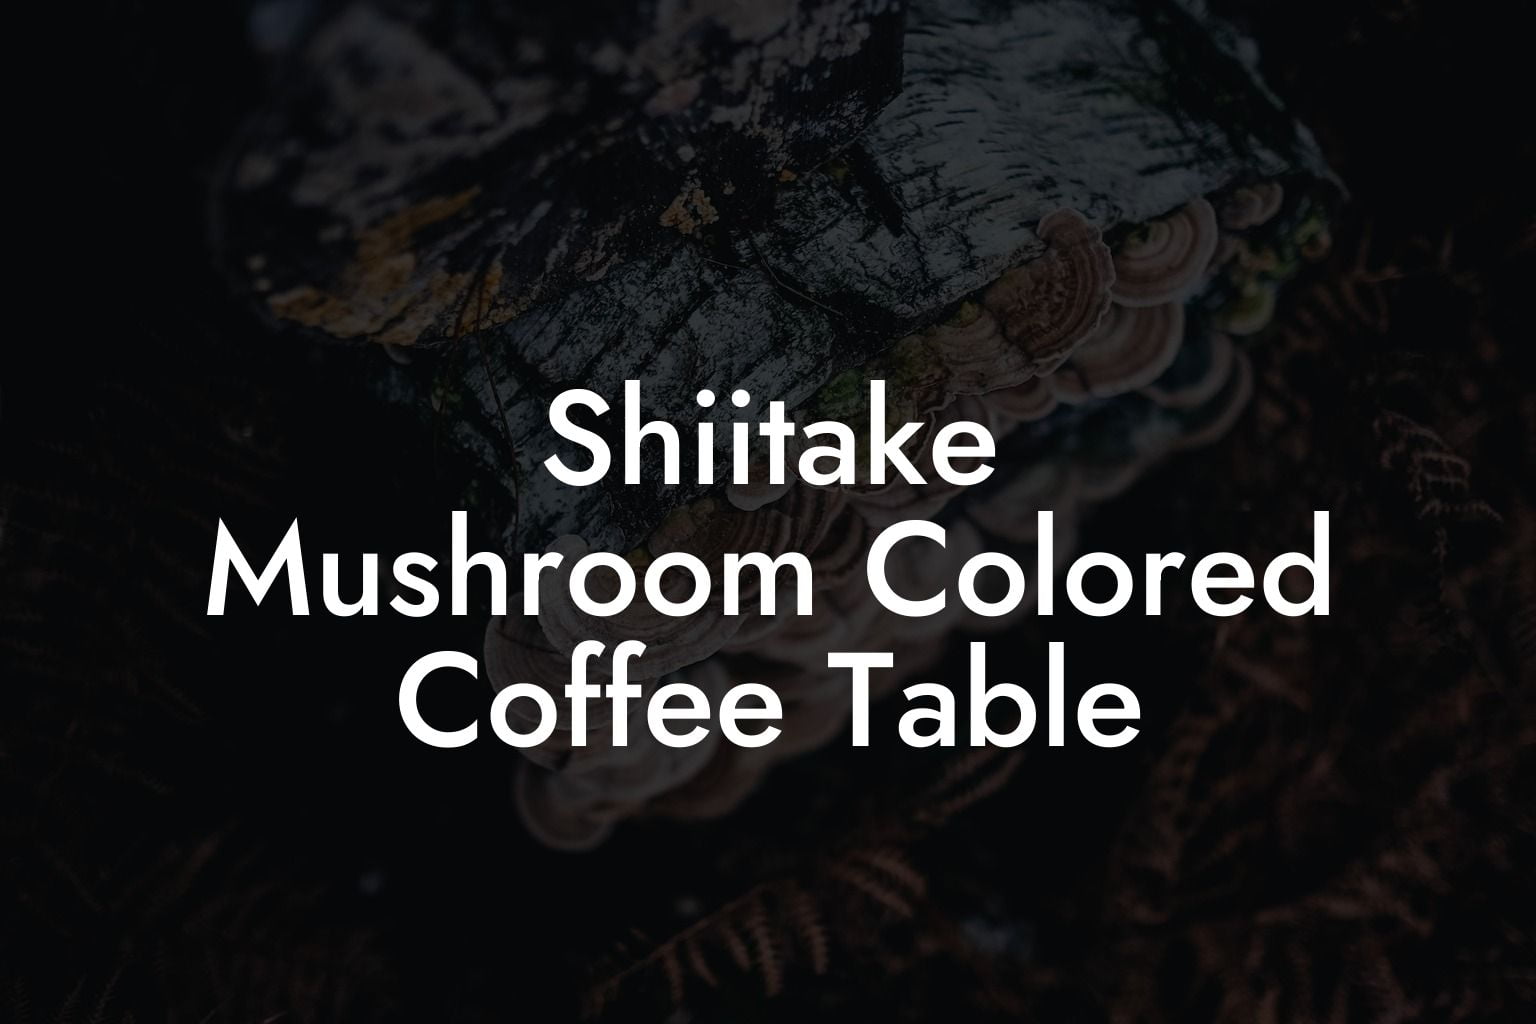 Shiitake Mushroom Colored Coffee Table